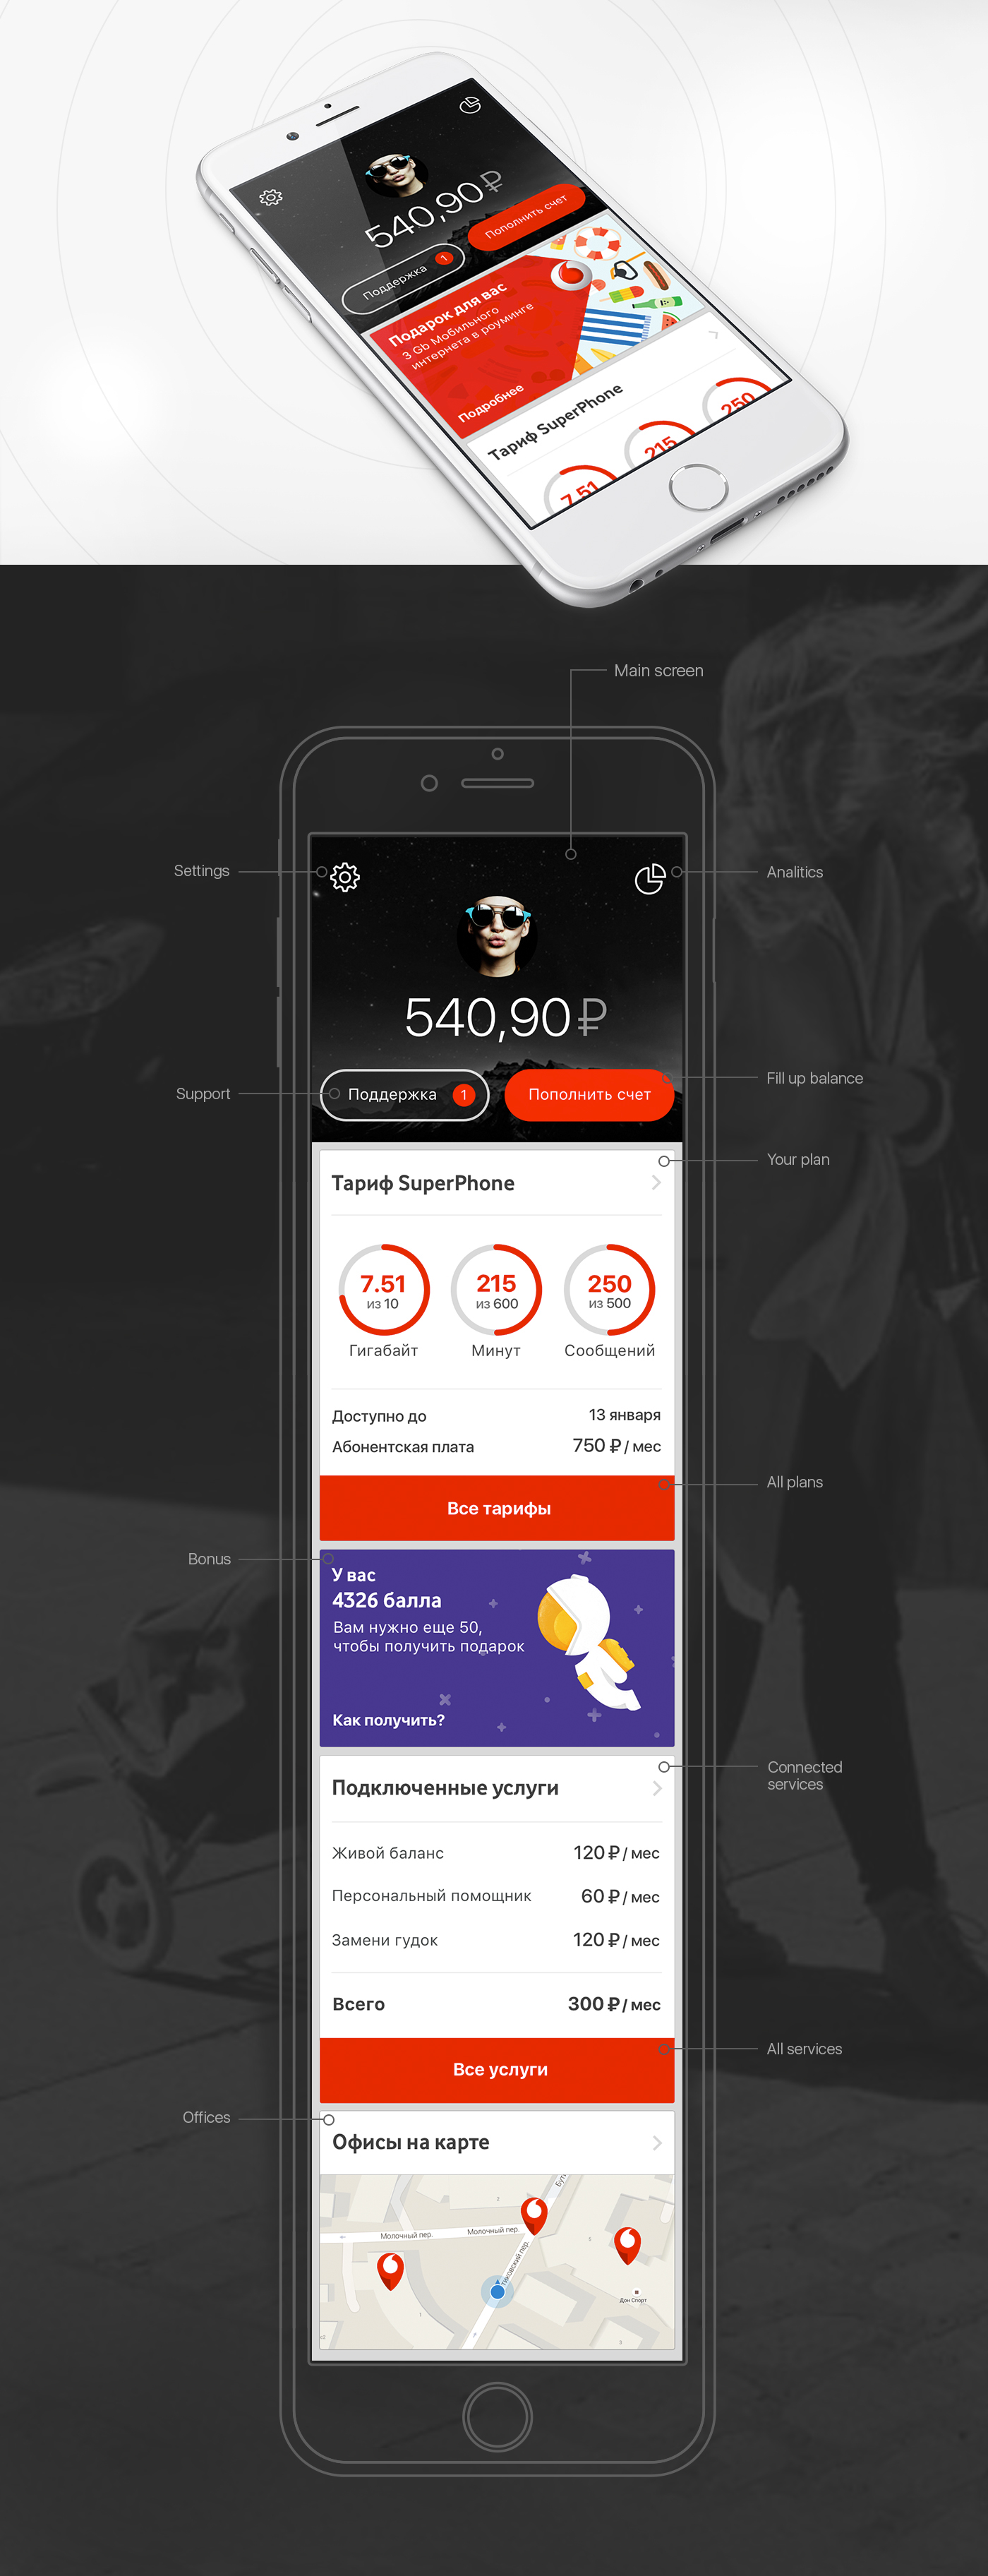 Appdesign design interaction app cards vodafone UI ux iphone